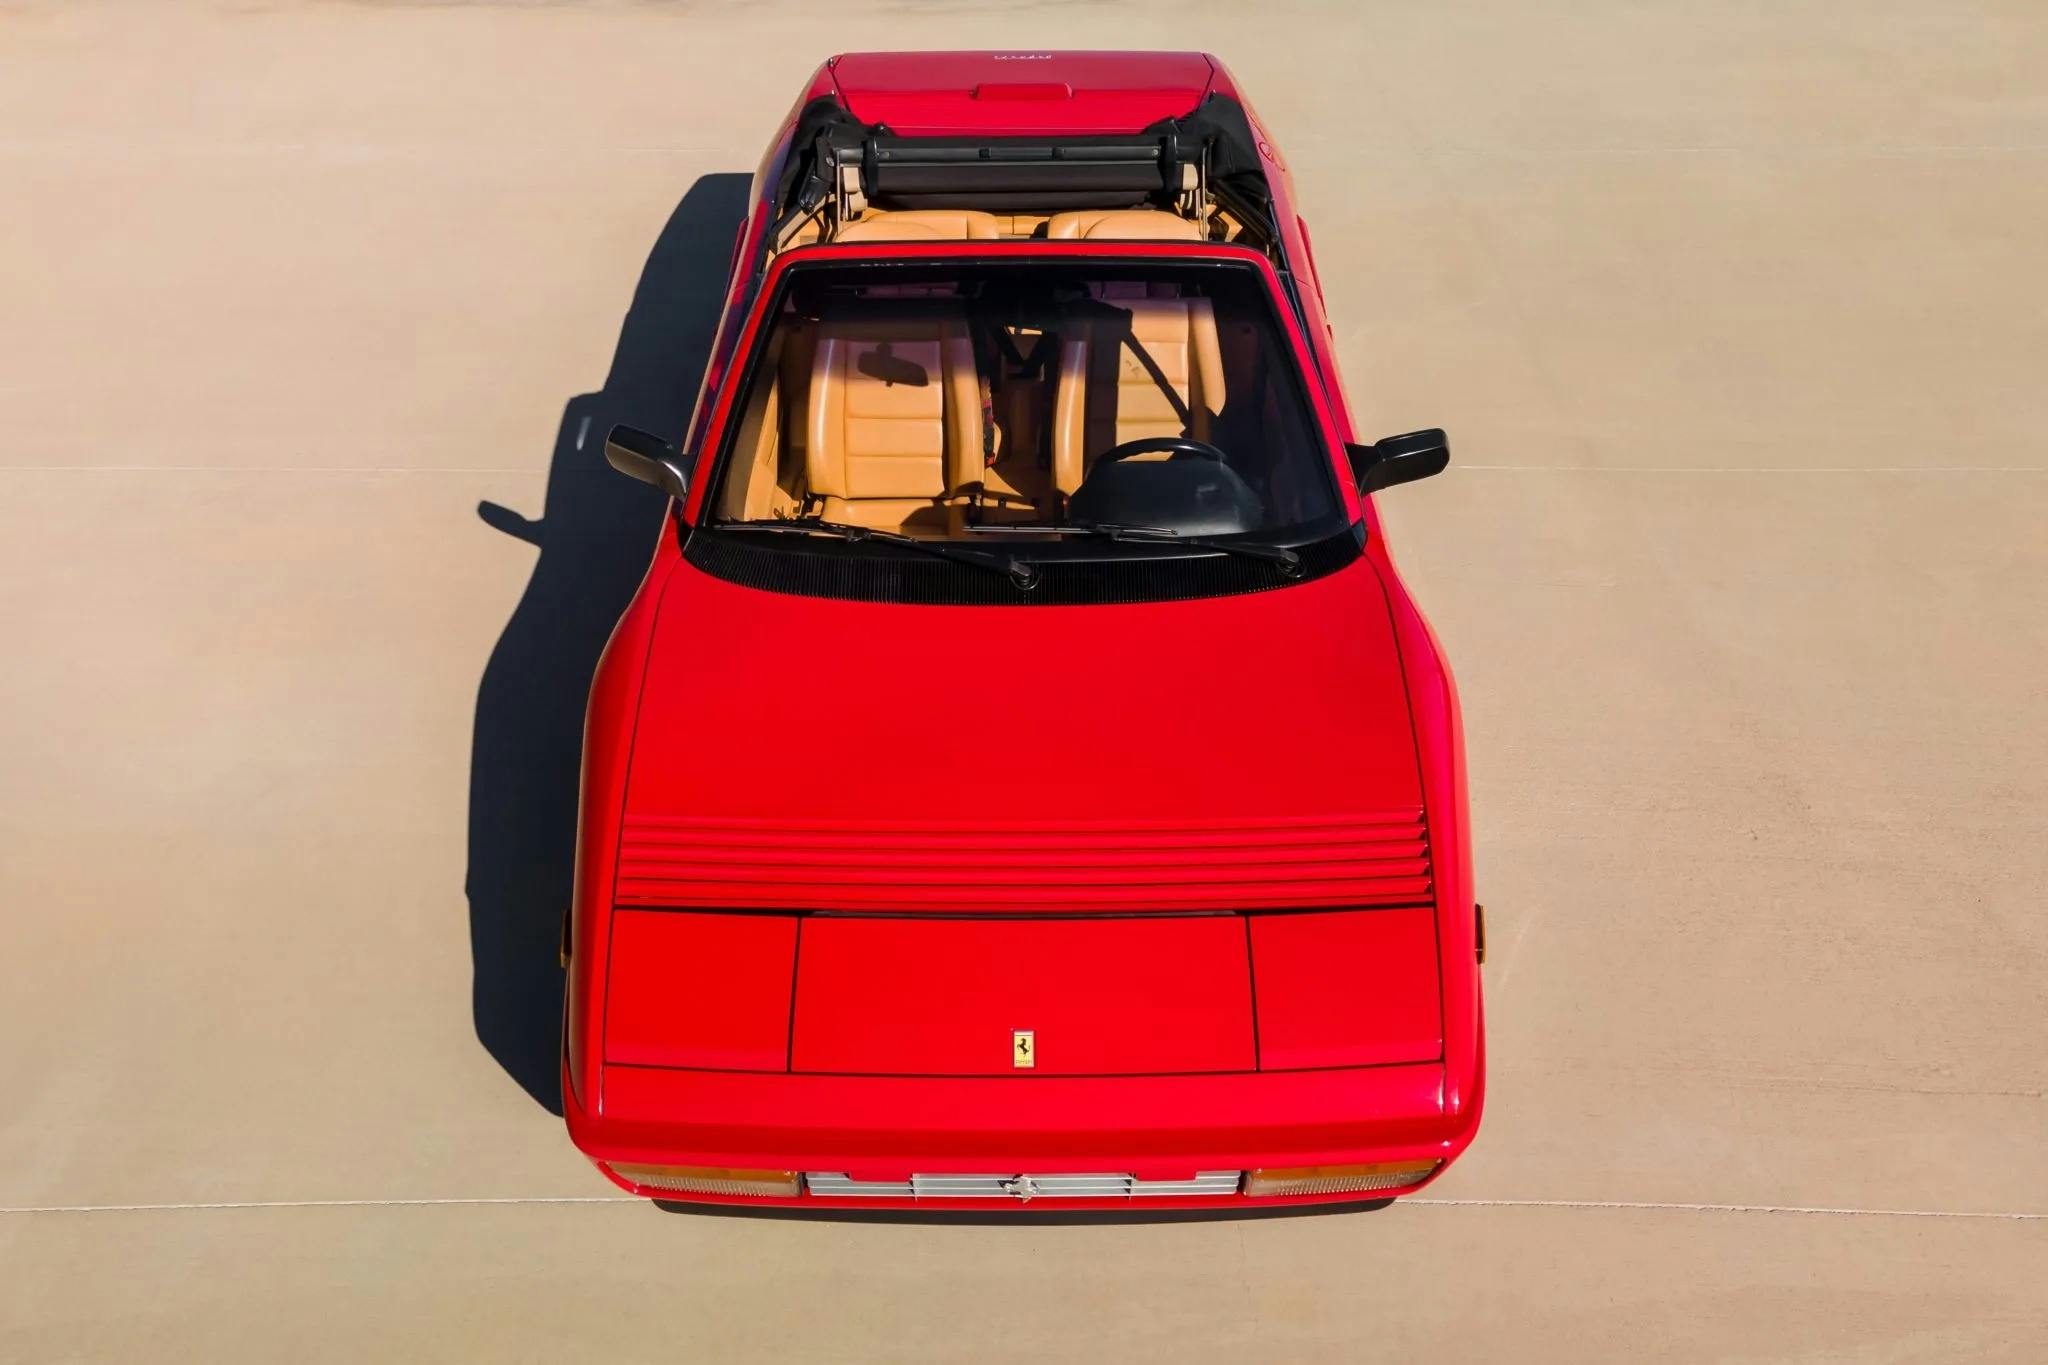 Ferrari Mondial high angle front